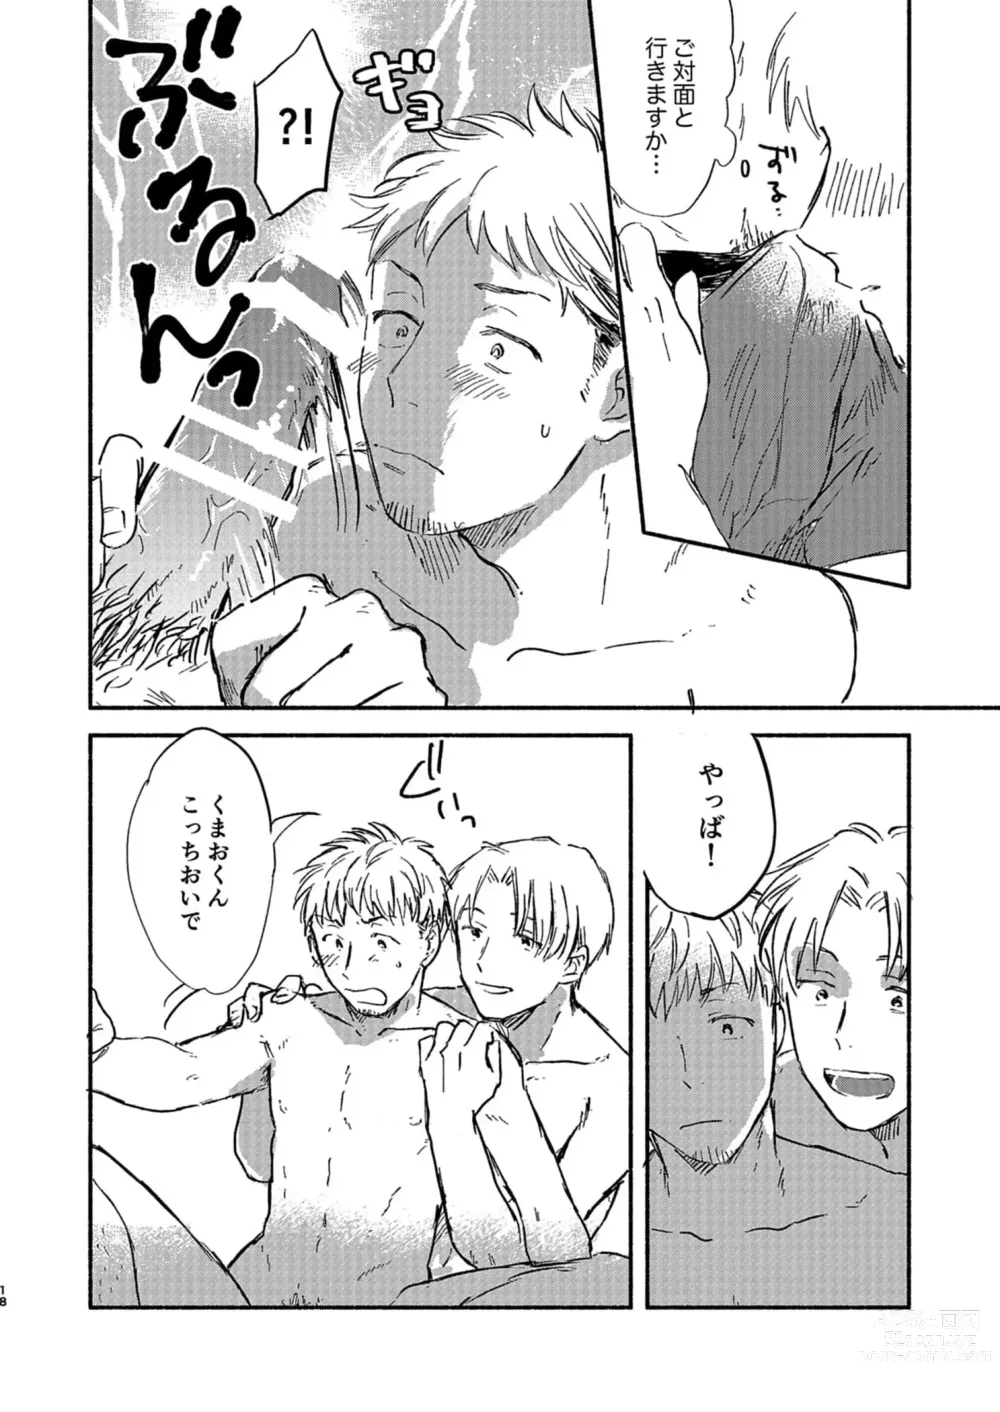 Page 18 of doujinshi Toaru GayVi Seisaku Gaisha Staff no Shanai Renai Jijou - The internal love affairs of the staff of a certain gay video production company.